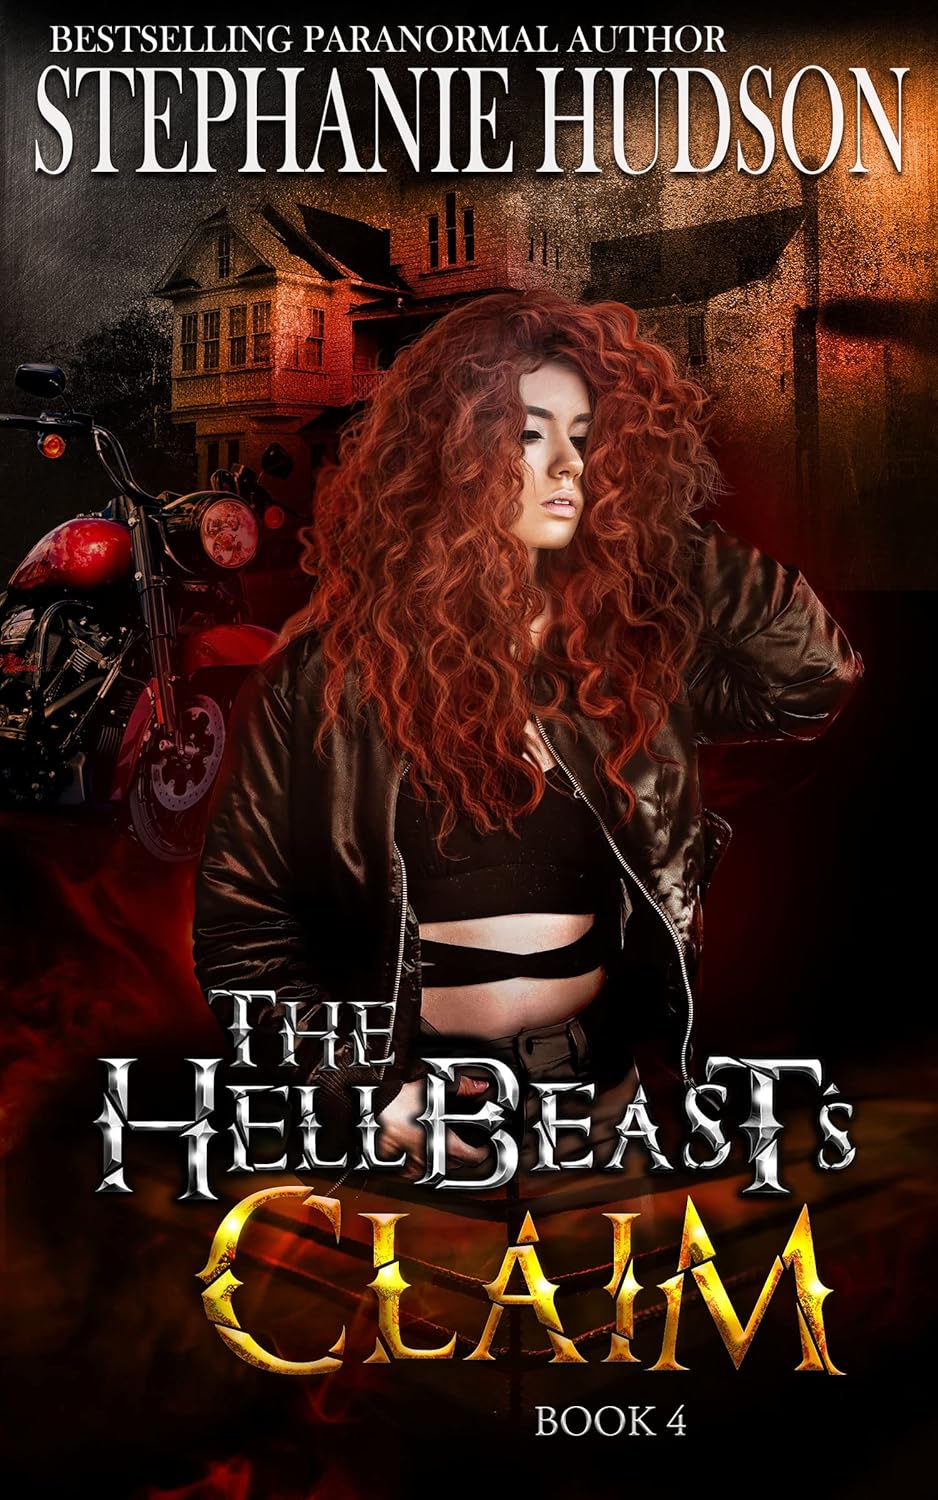 The Hellbeast's Claim